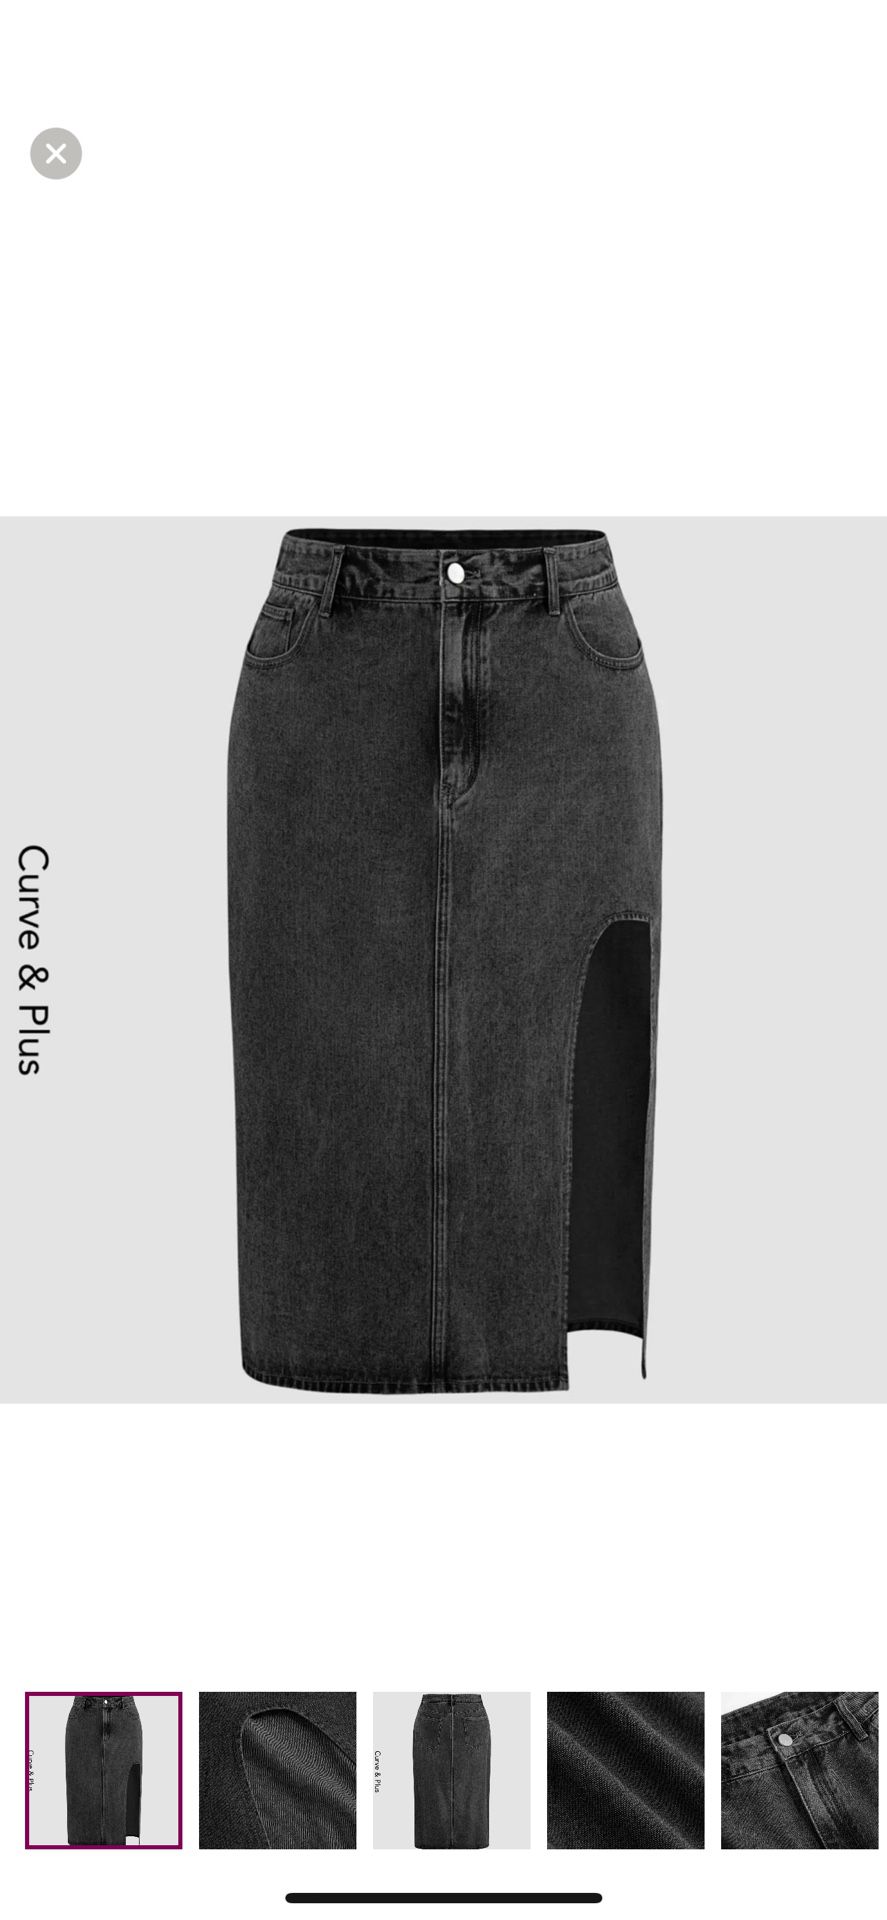 Denim Skirt(Size 1X)